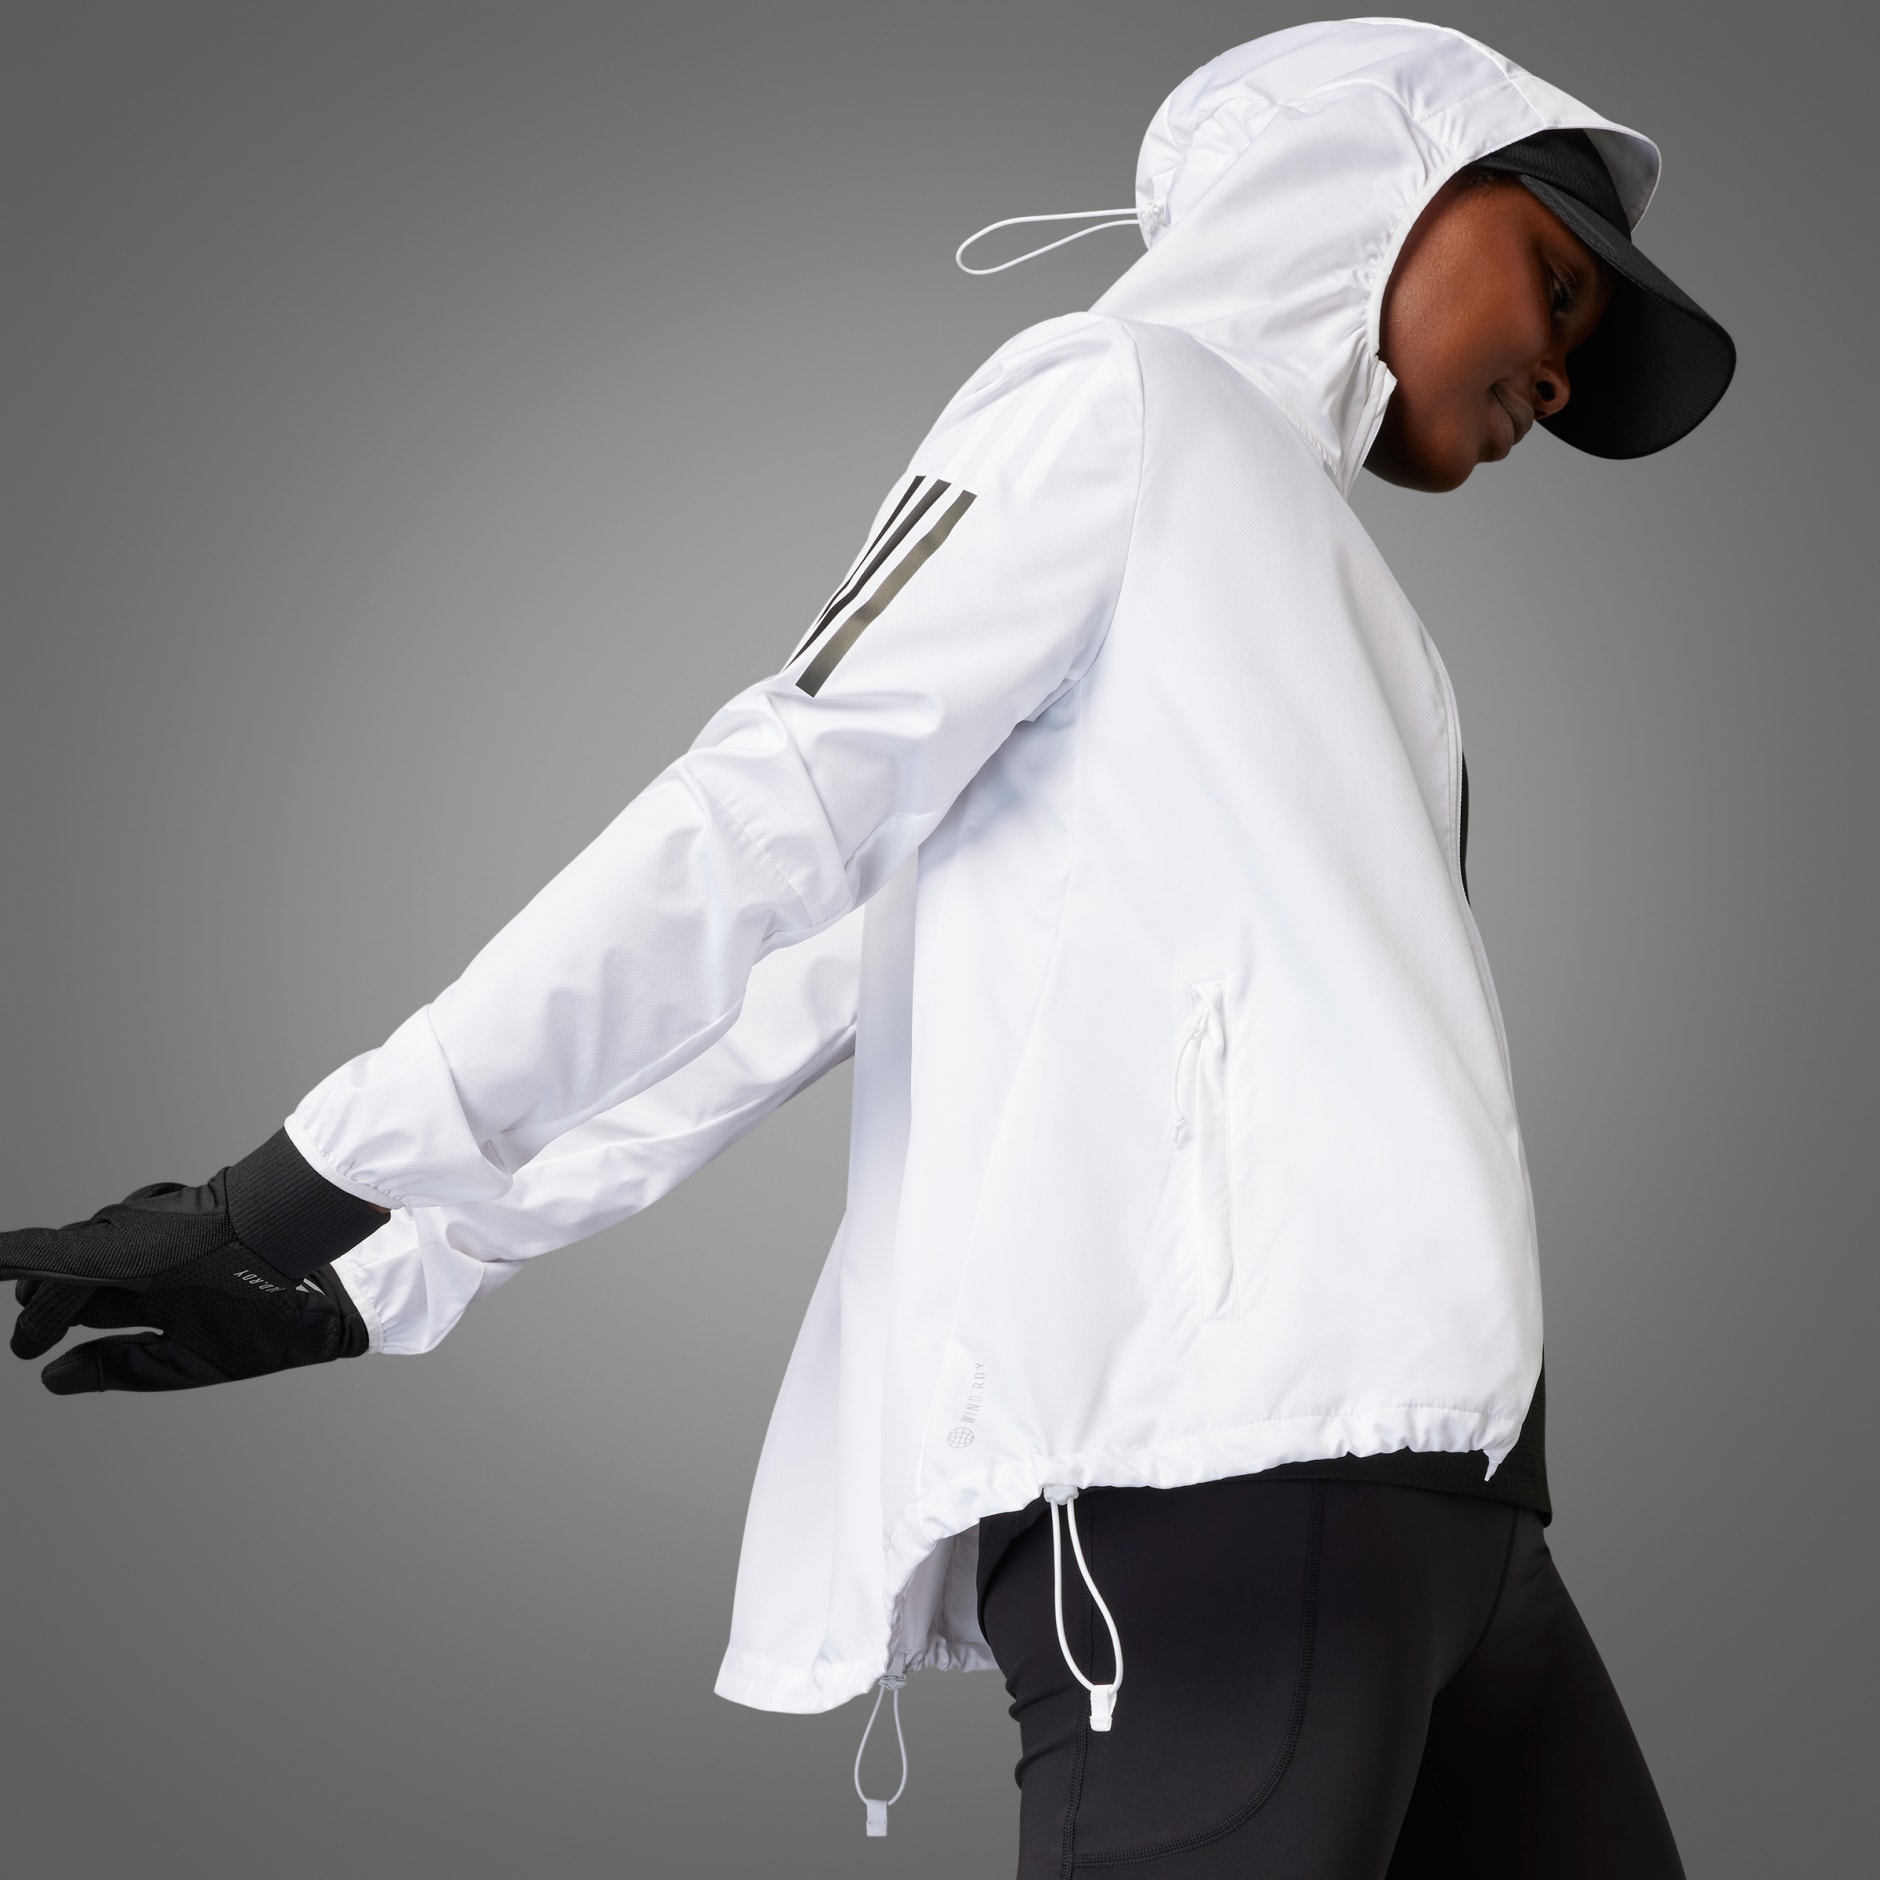 Clothing - Own the Run Hooded Running Windbreaker - White | adidas Israel